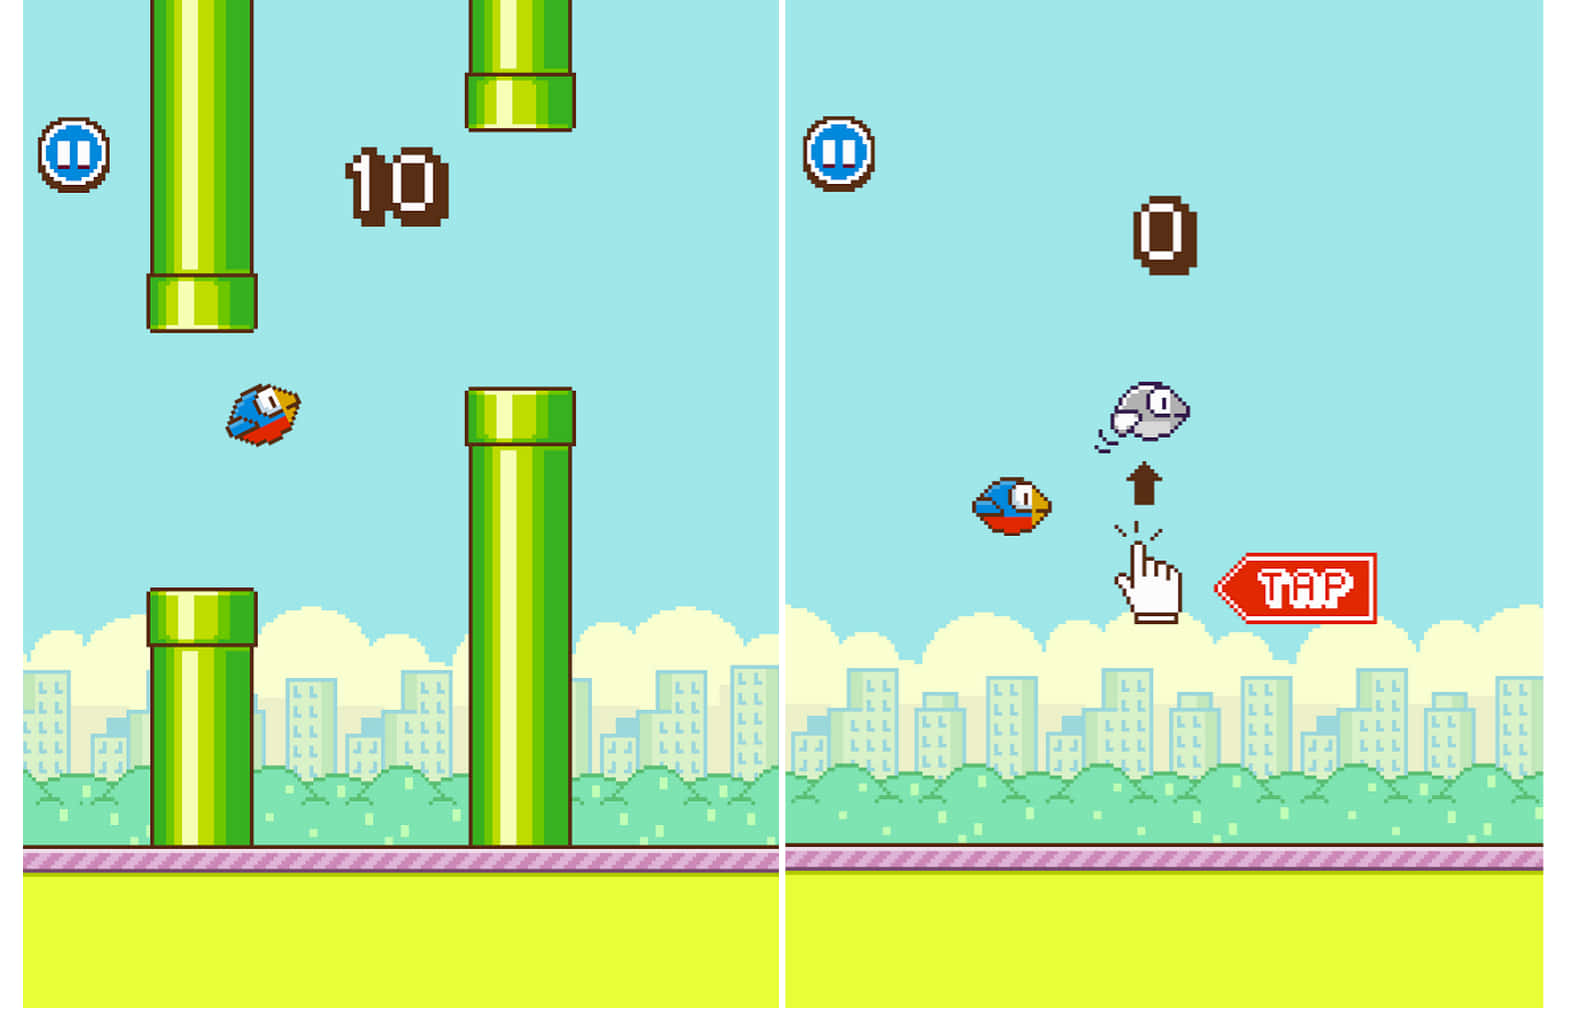 Screenshots of the Flappy Bird game.